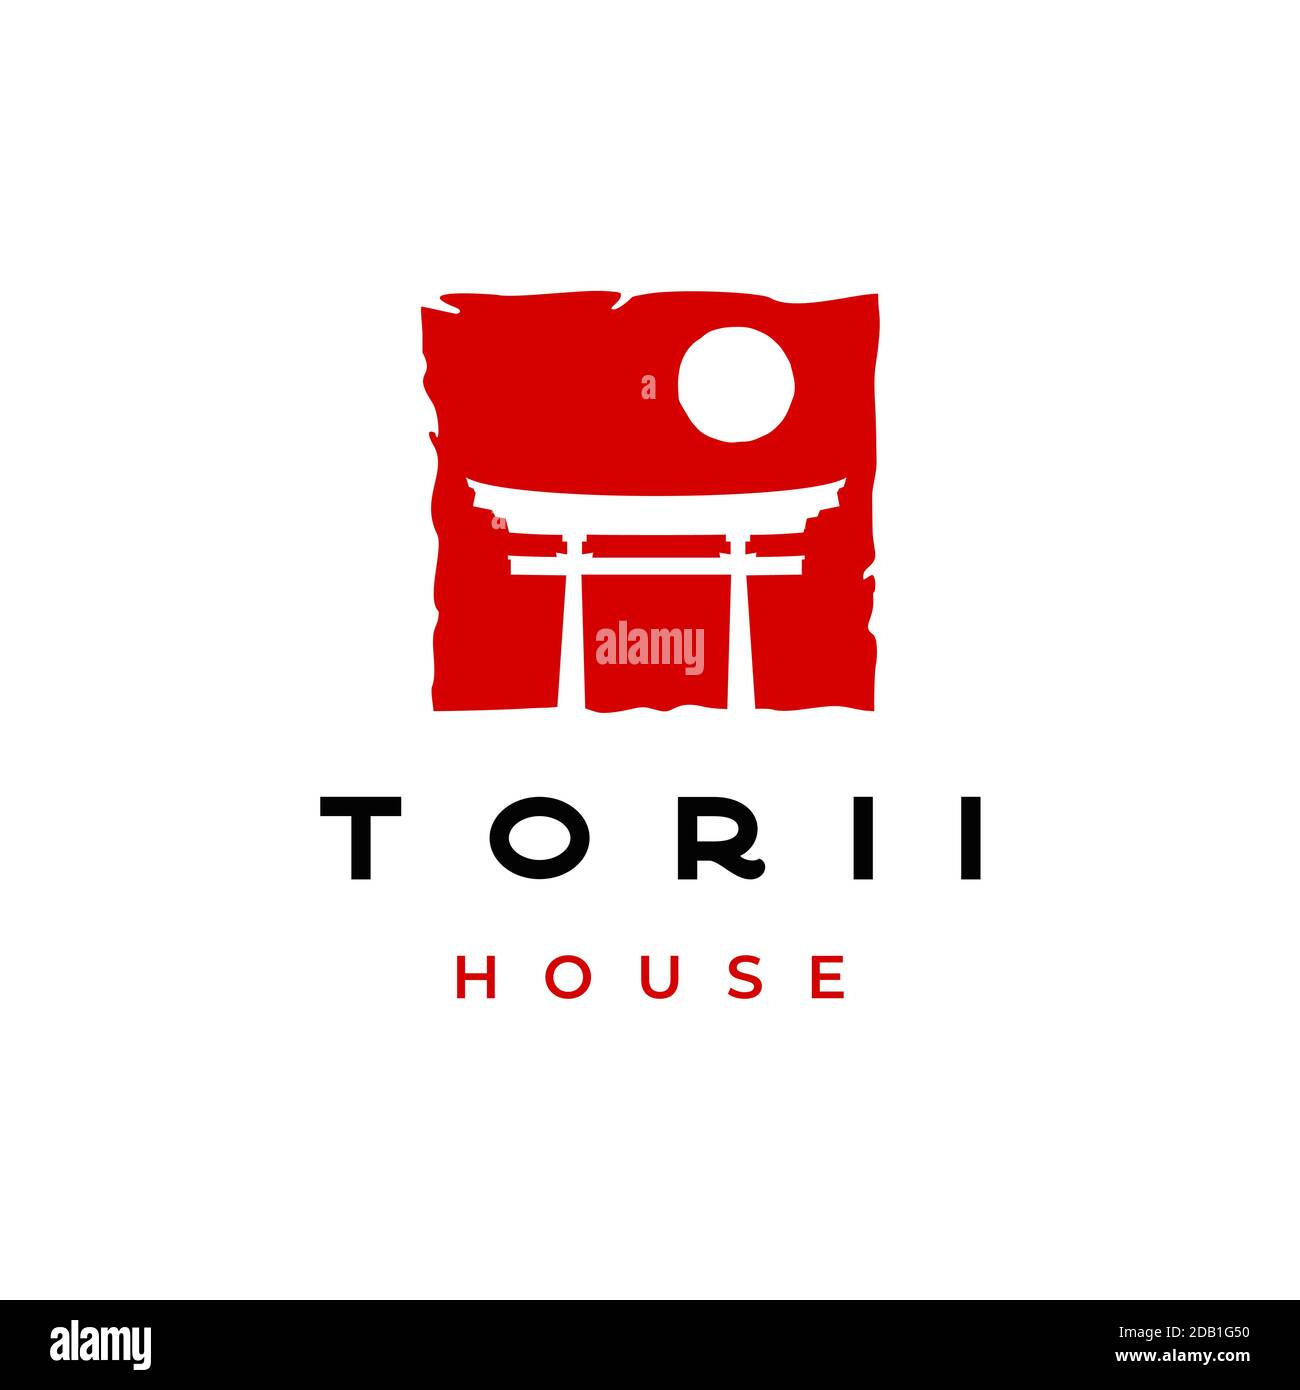 Torii house / torii gate hipster vintage logo design inspiration Stock Vector